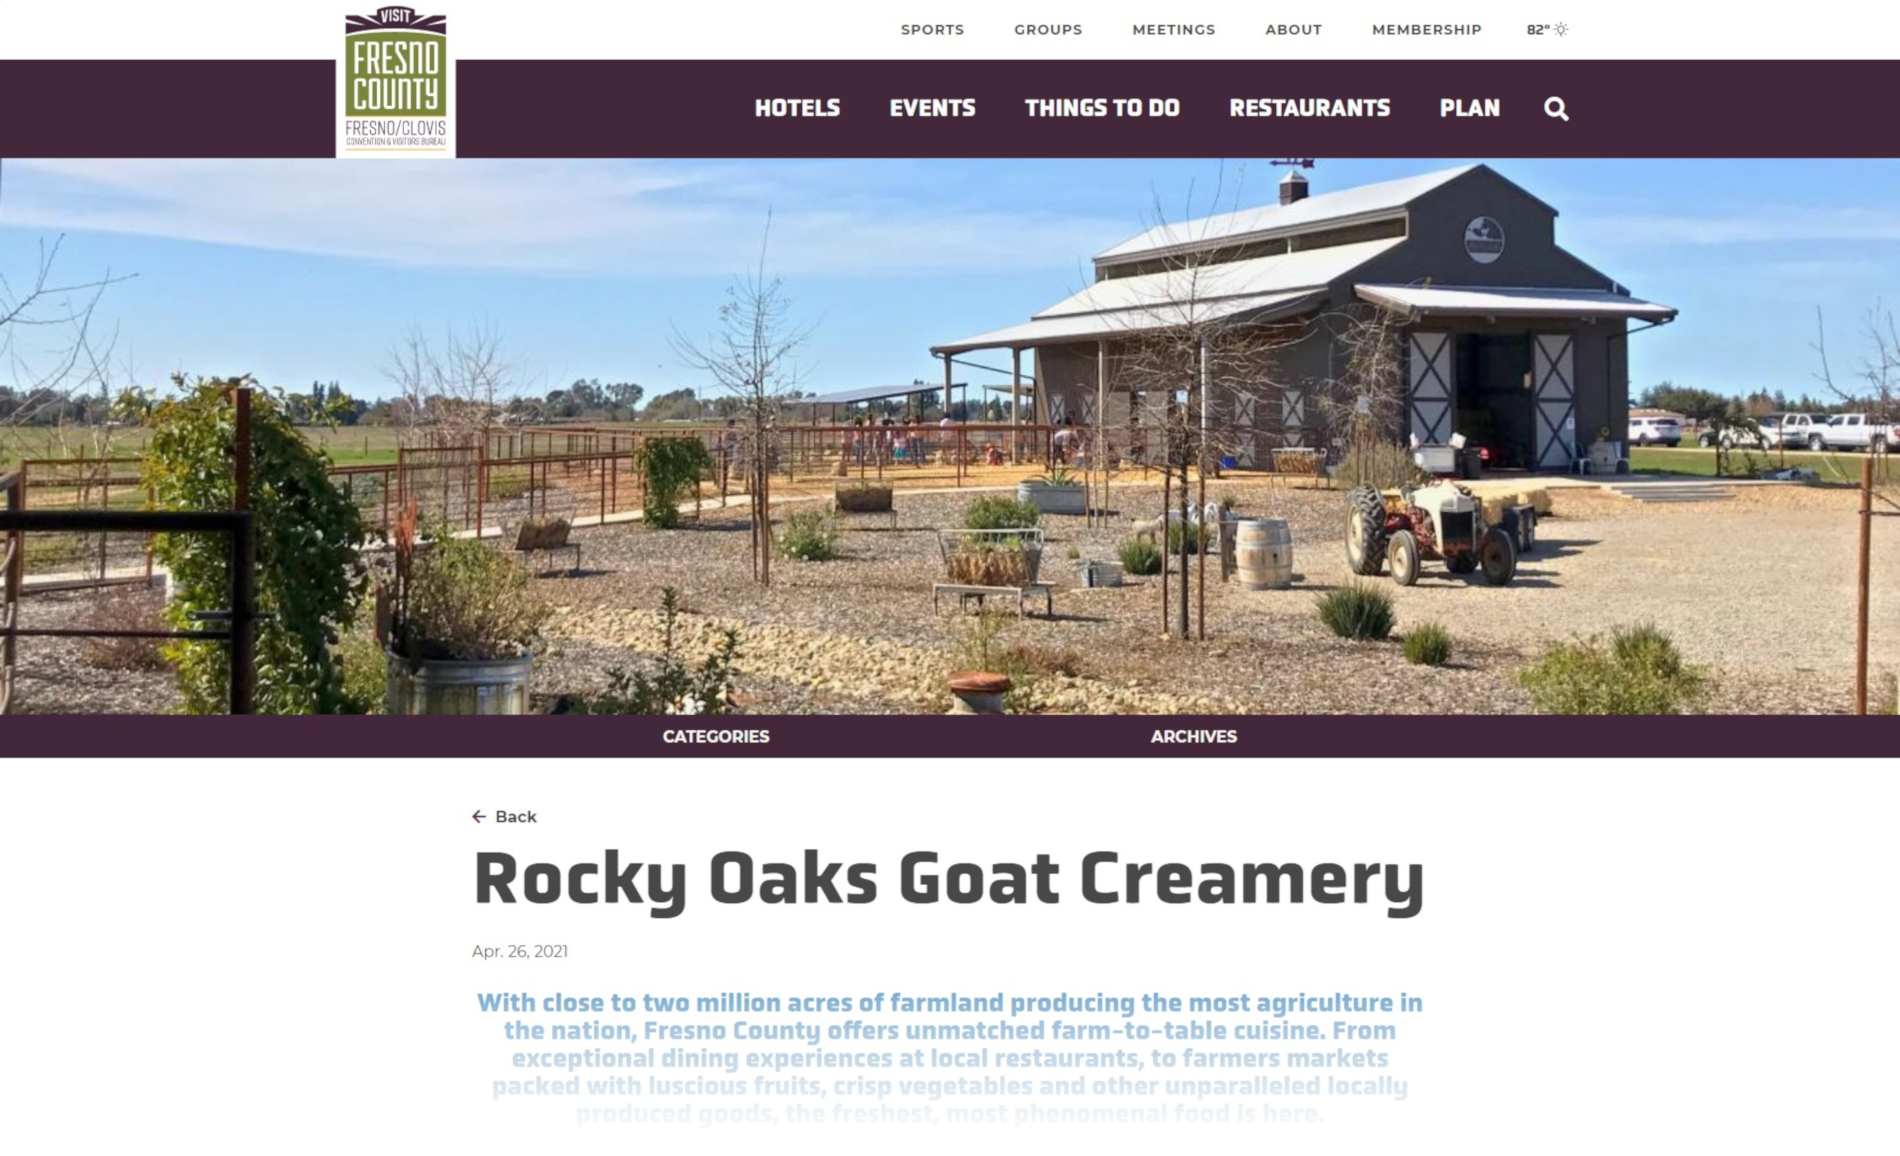 Rocky Oaks Goat Creamery Featured on Fresno County Visitor's Bureau Website!